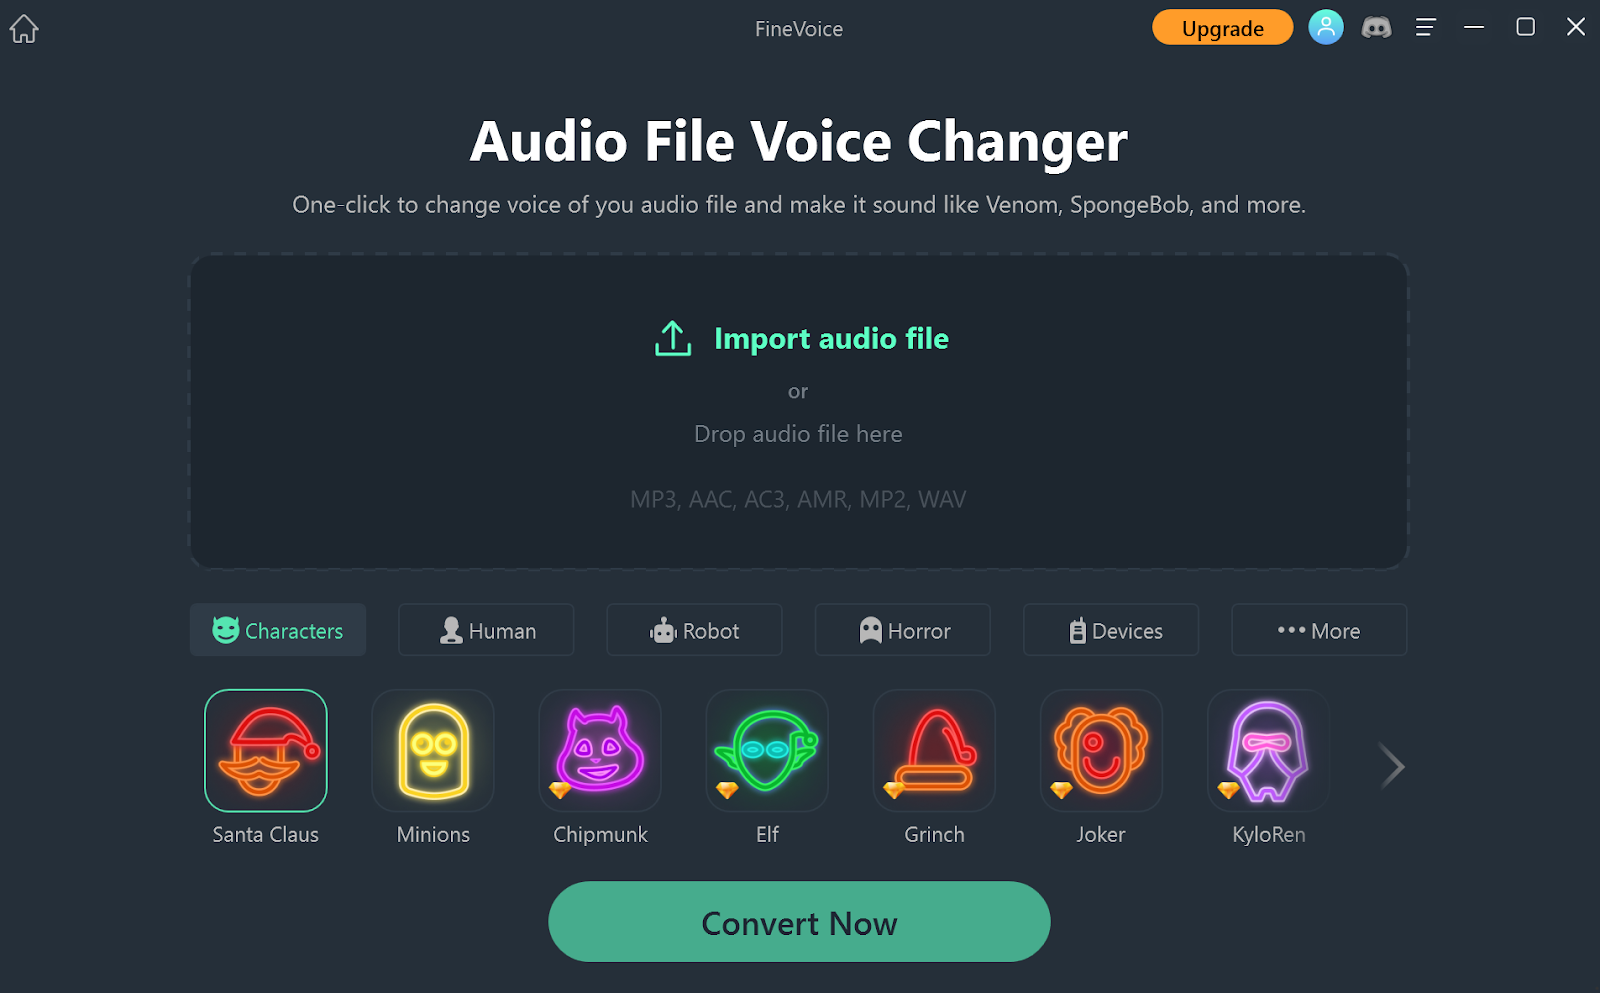 The FineVoice Audio File Voice Changer.